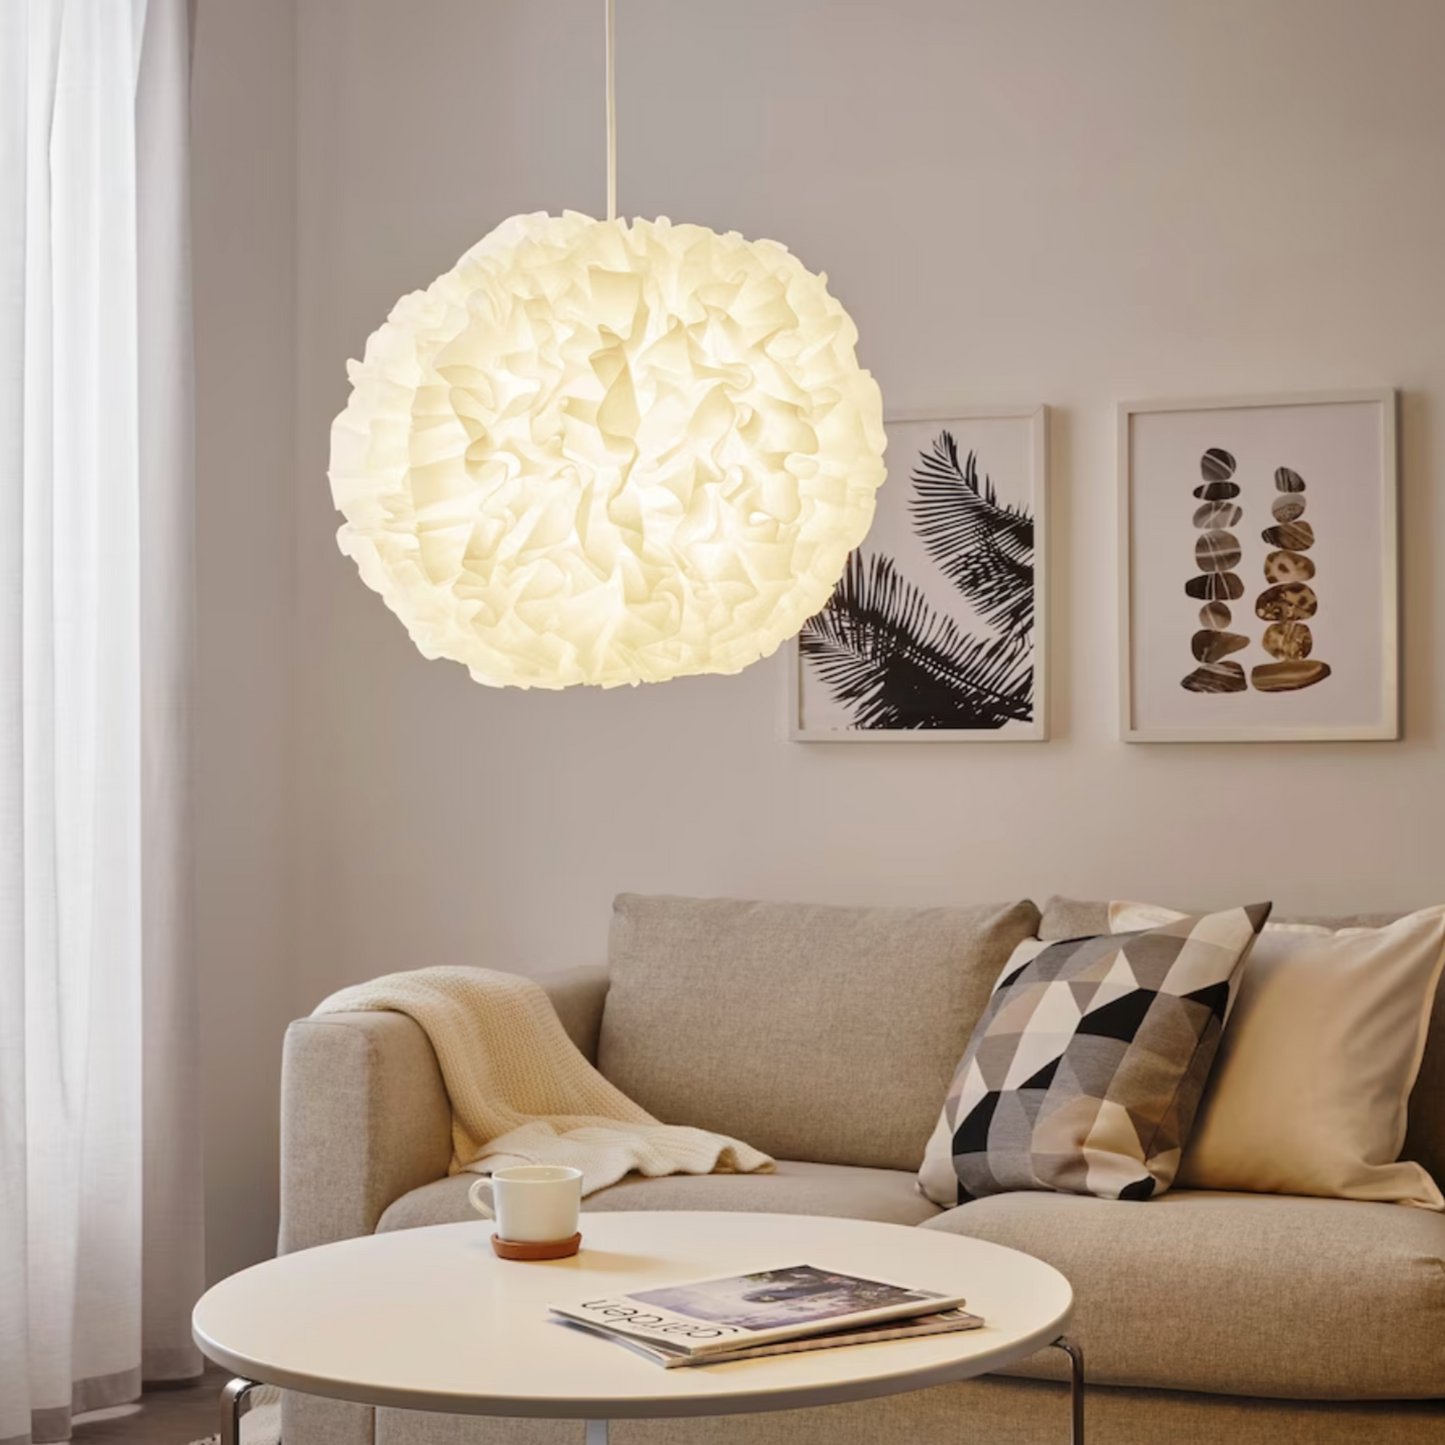 IKEA Vindkast, Pendant - White, 50cm (4660197589057)